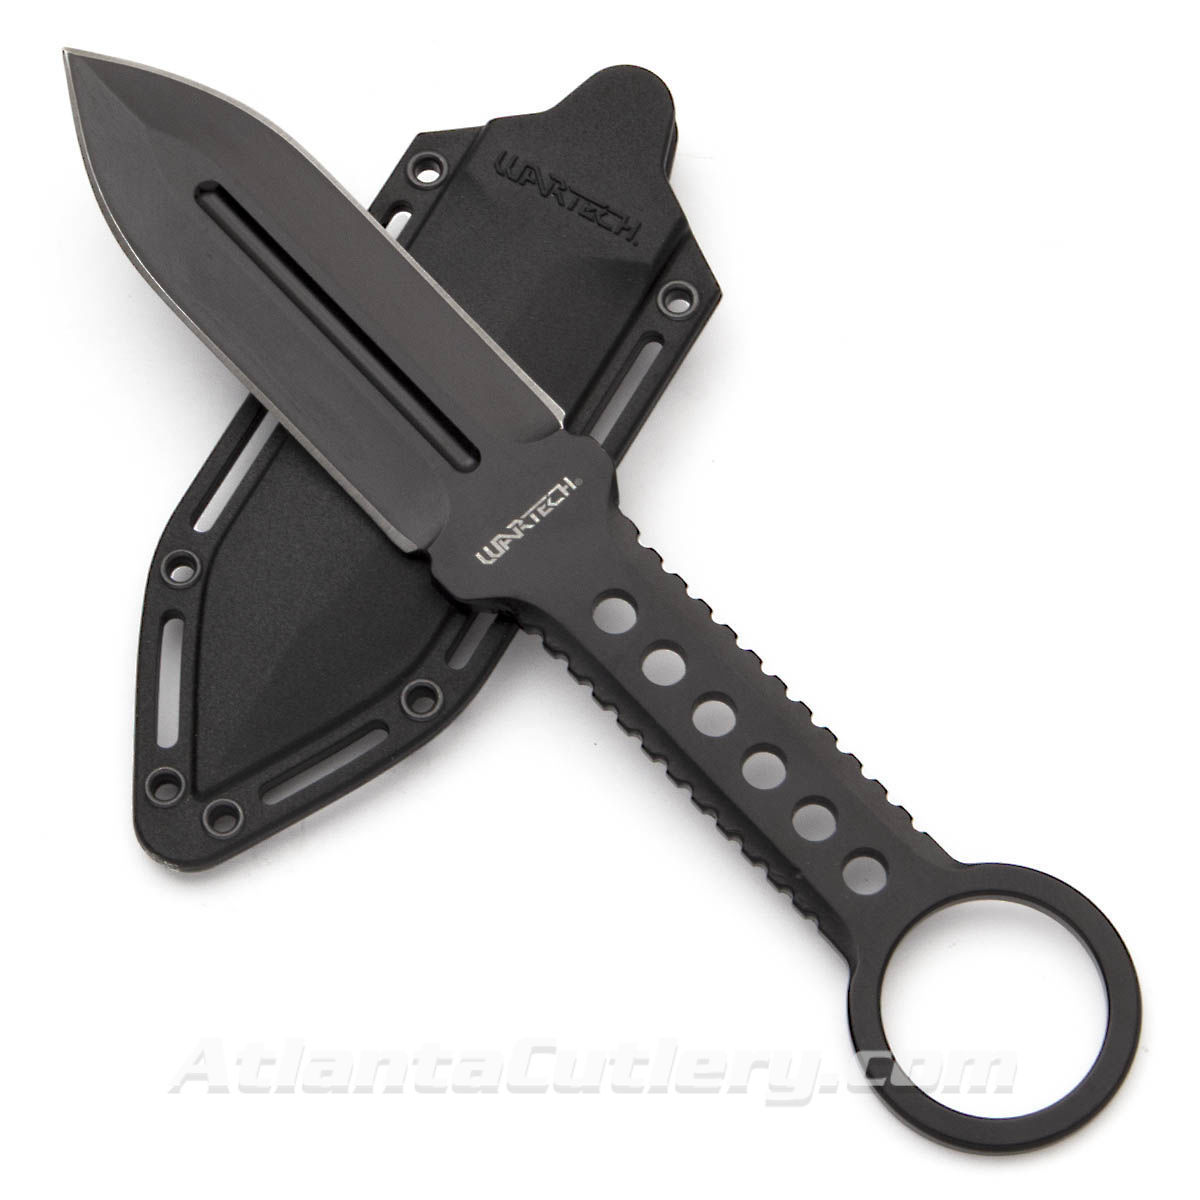 Wartech Black Boot or Belt Dagger includes Kydex sheath